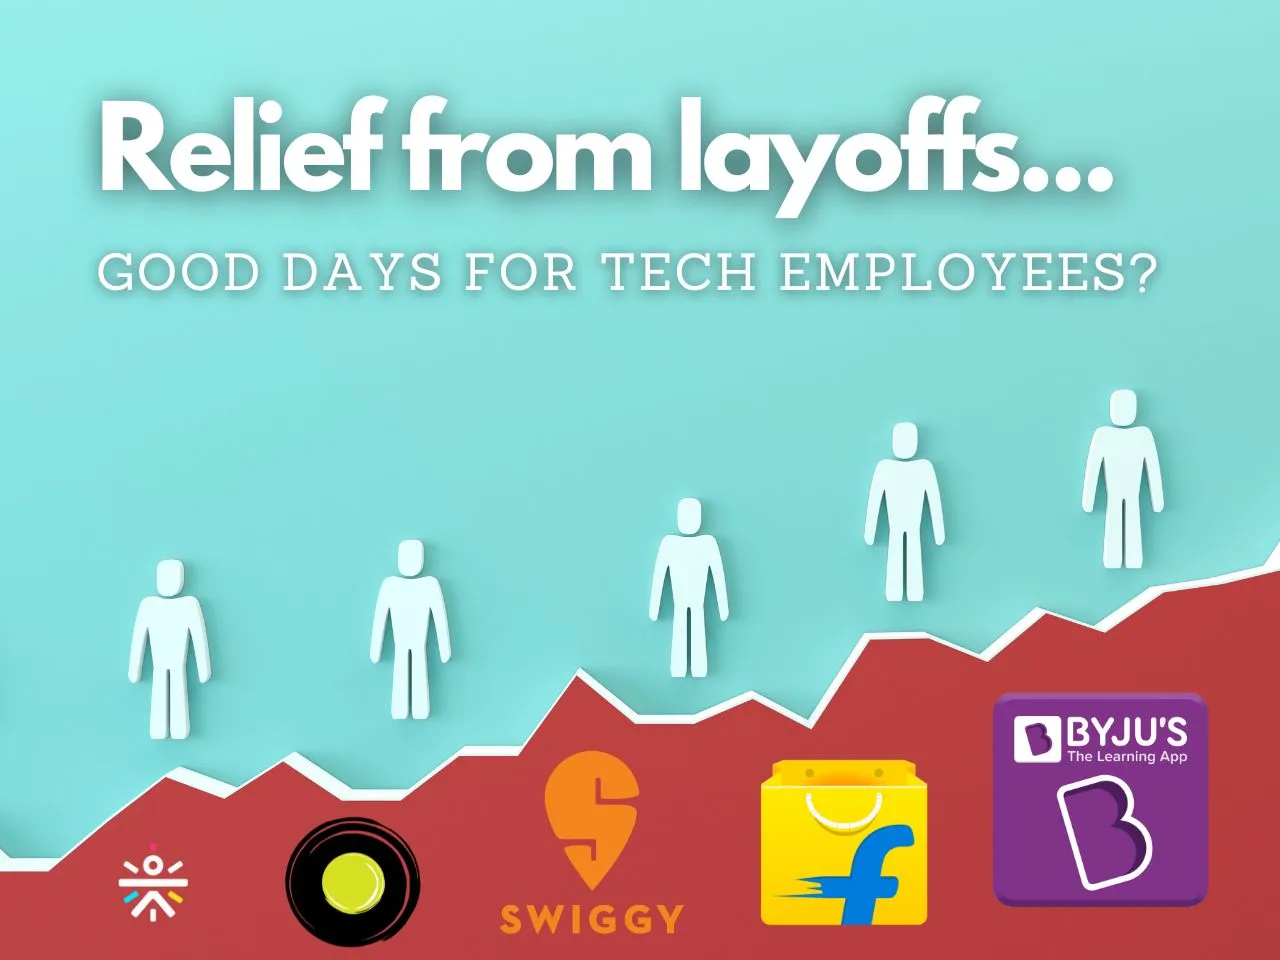 Good News For Tech Employees! Finally A Decline In Layoffs...